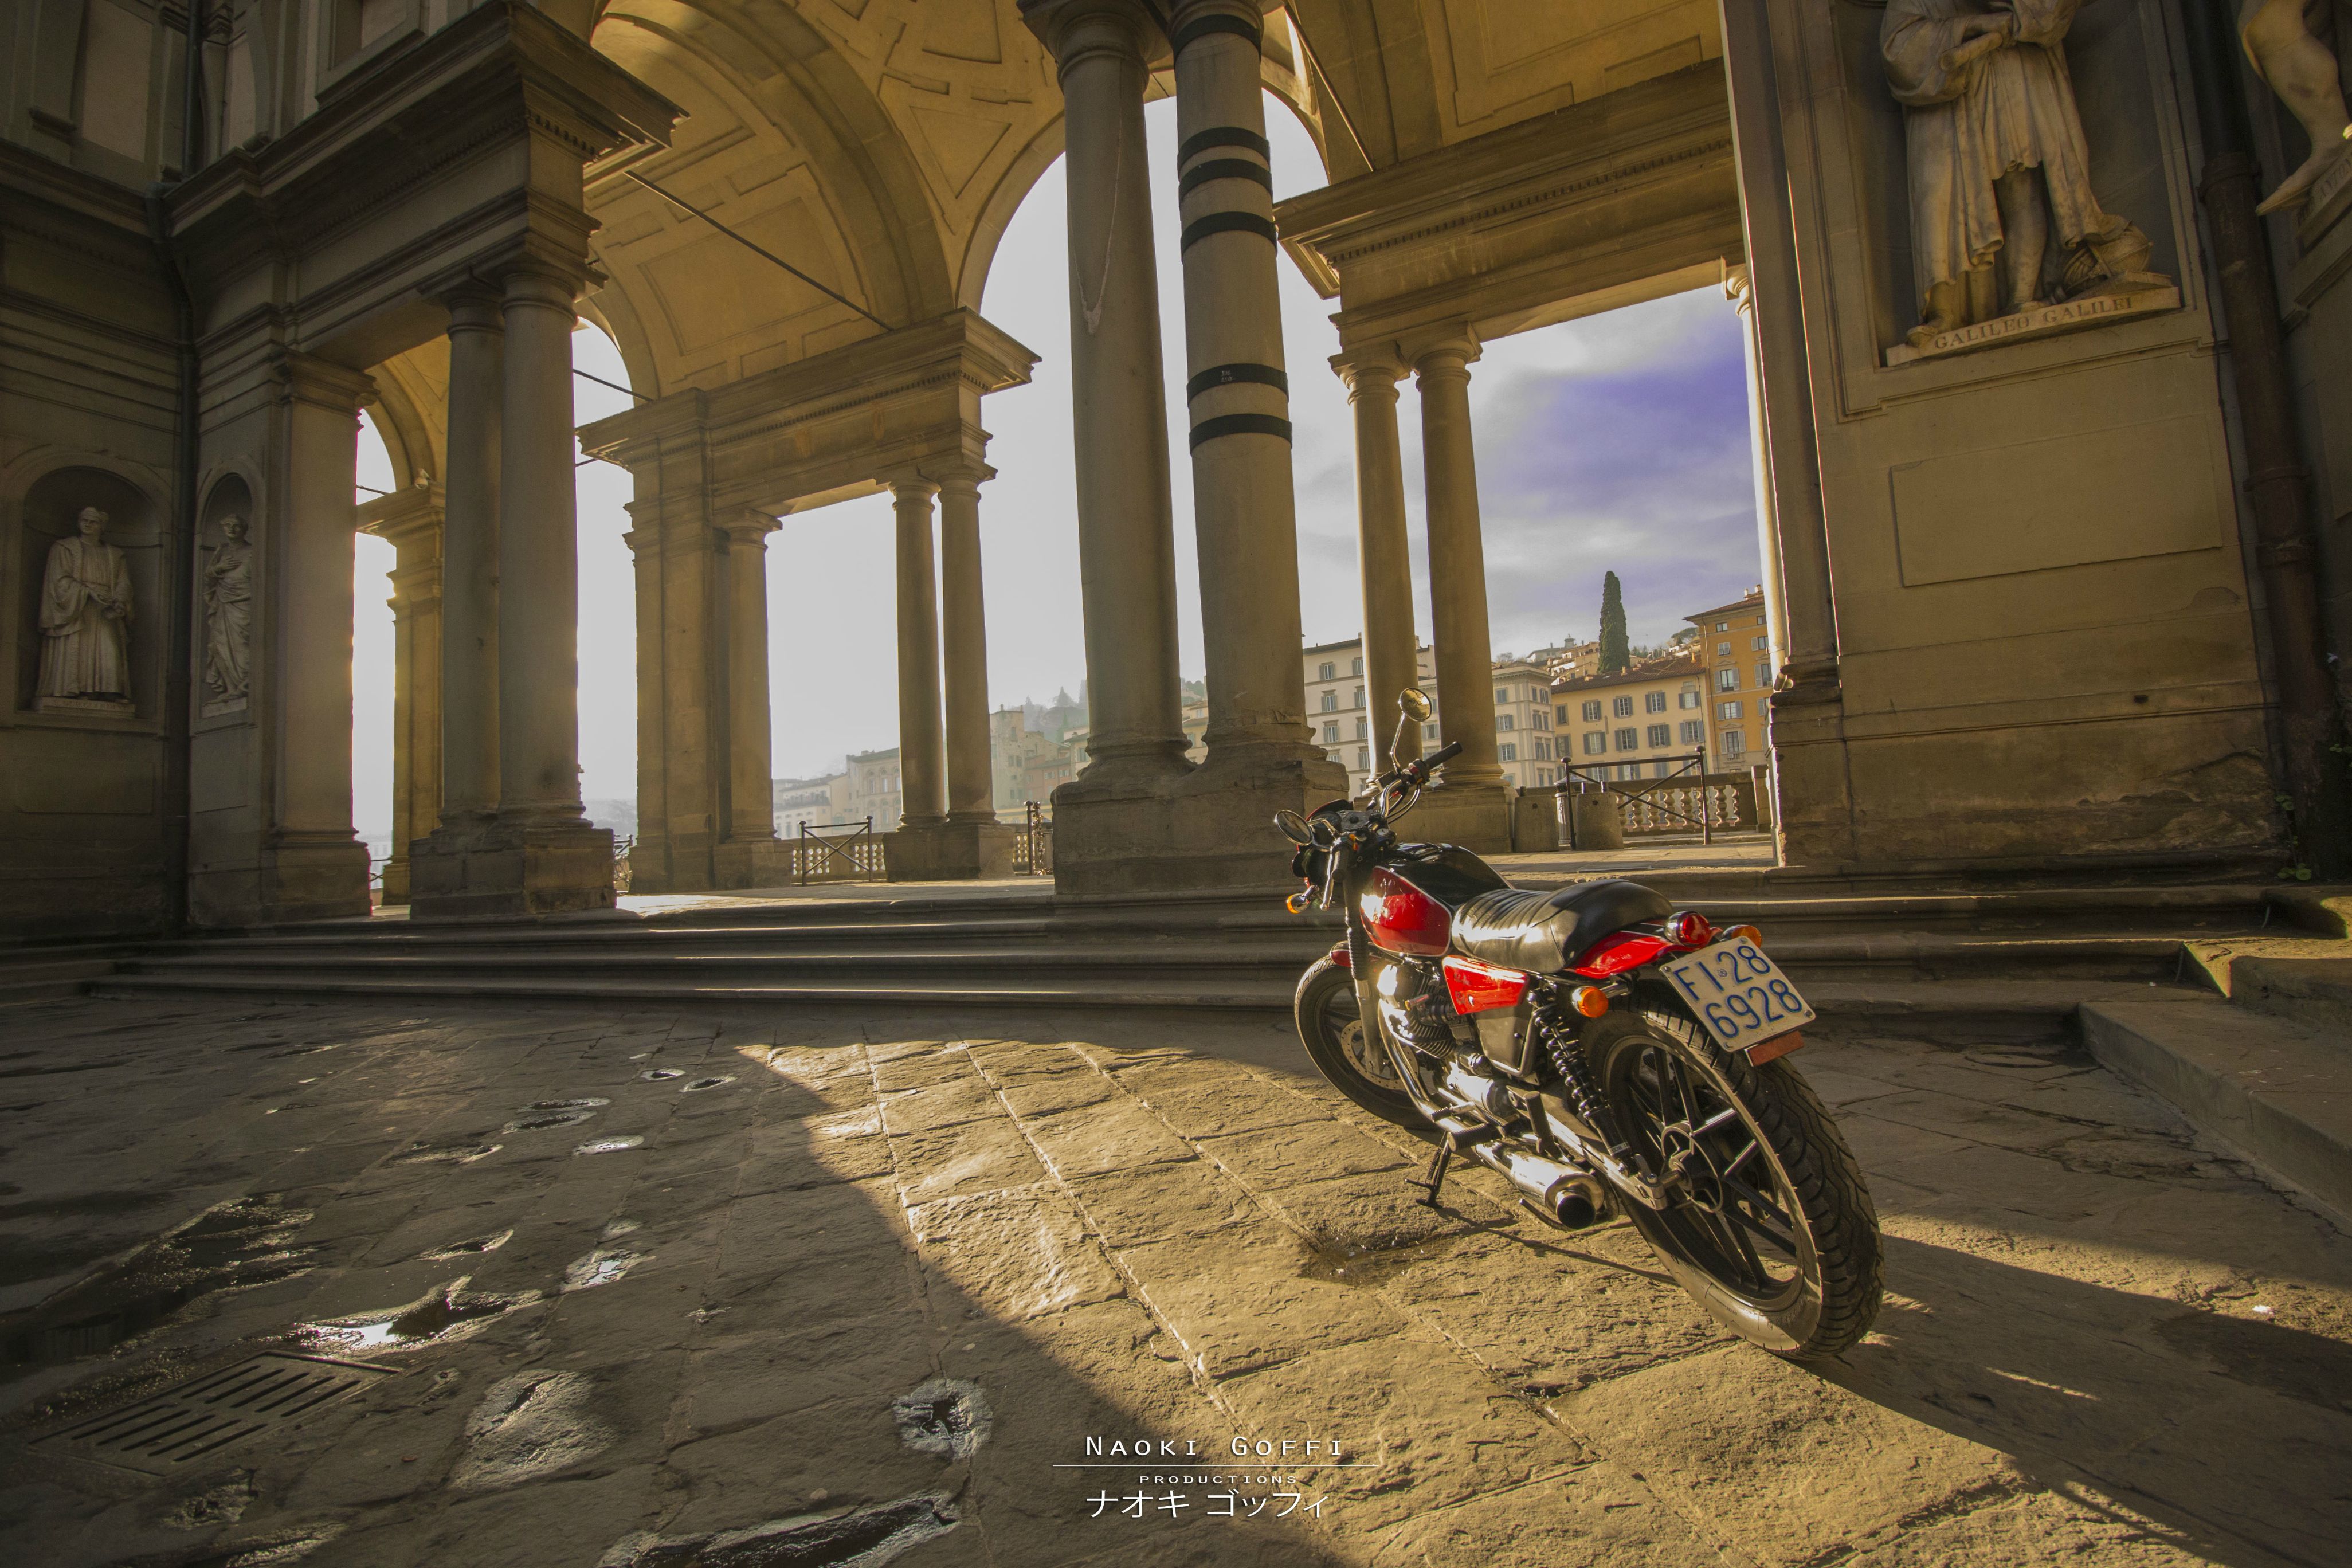 MotoGuzzi V65 by Fabio Goffi